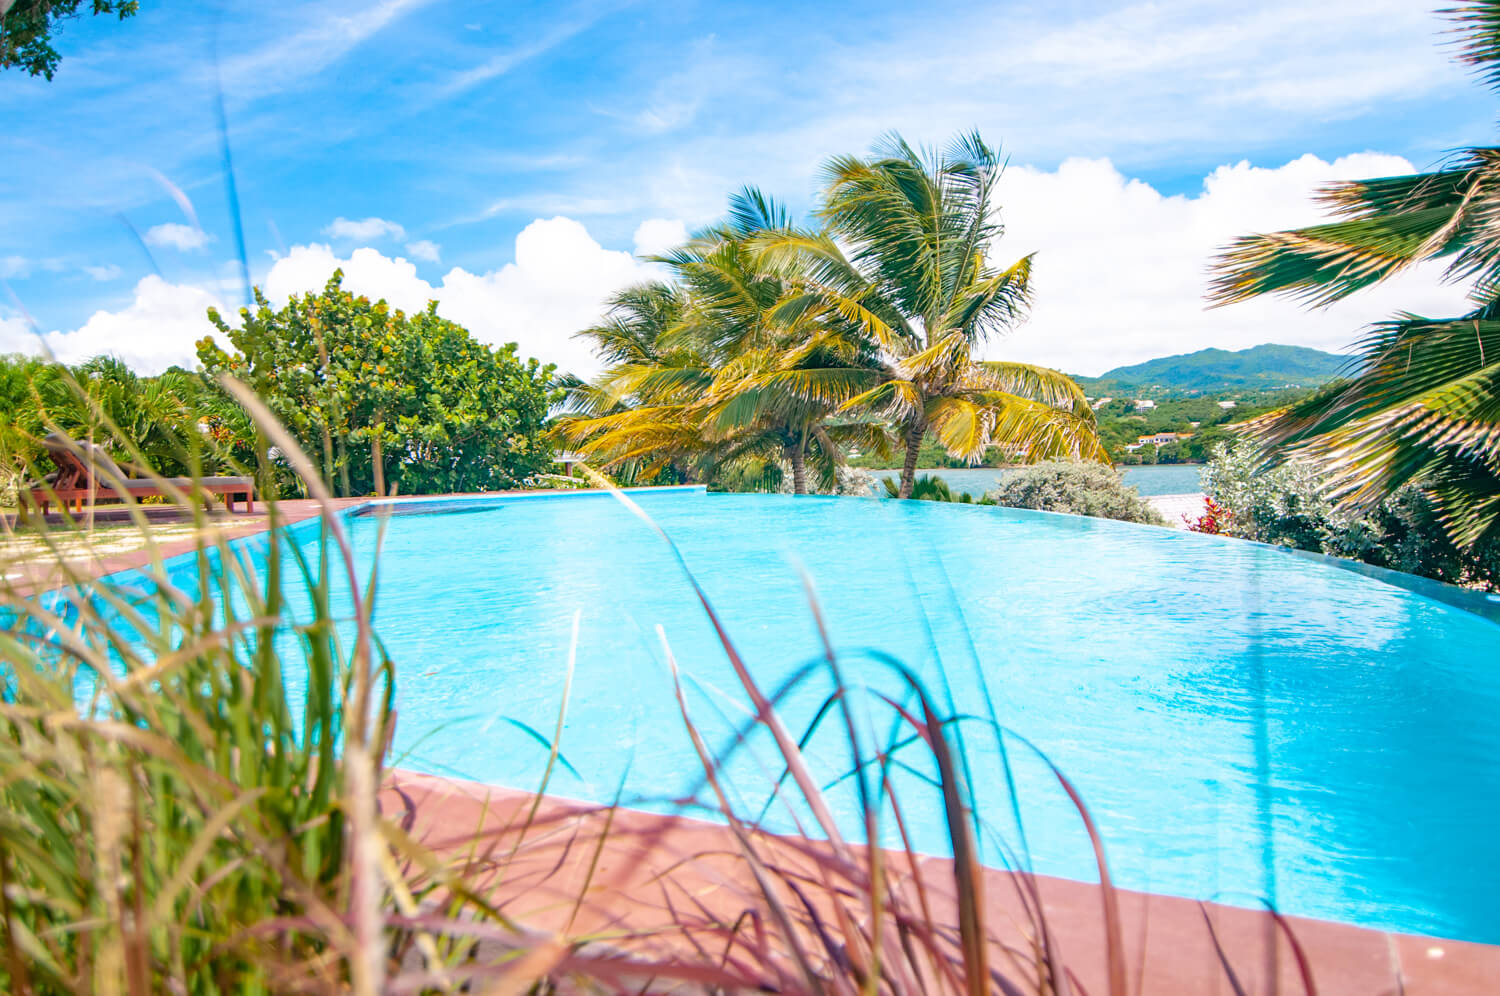 473 Grenada Boutique Resorts Specia deals for 2020